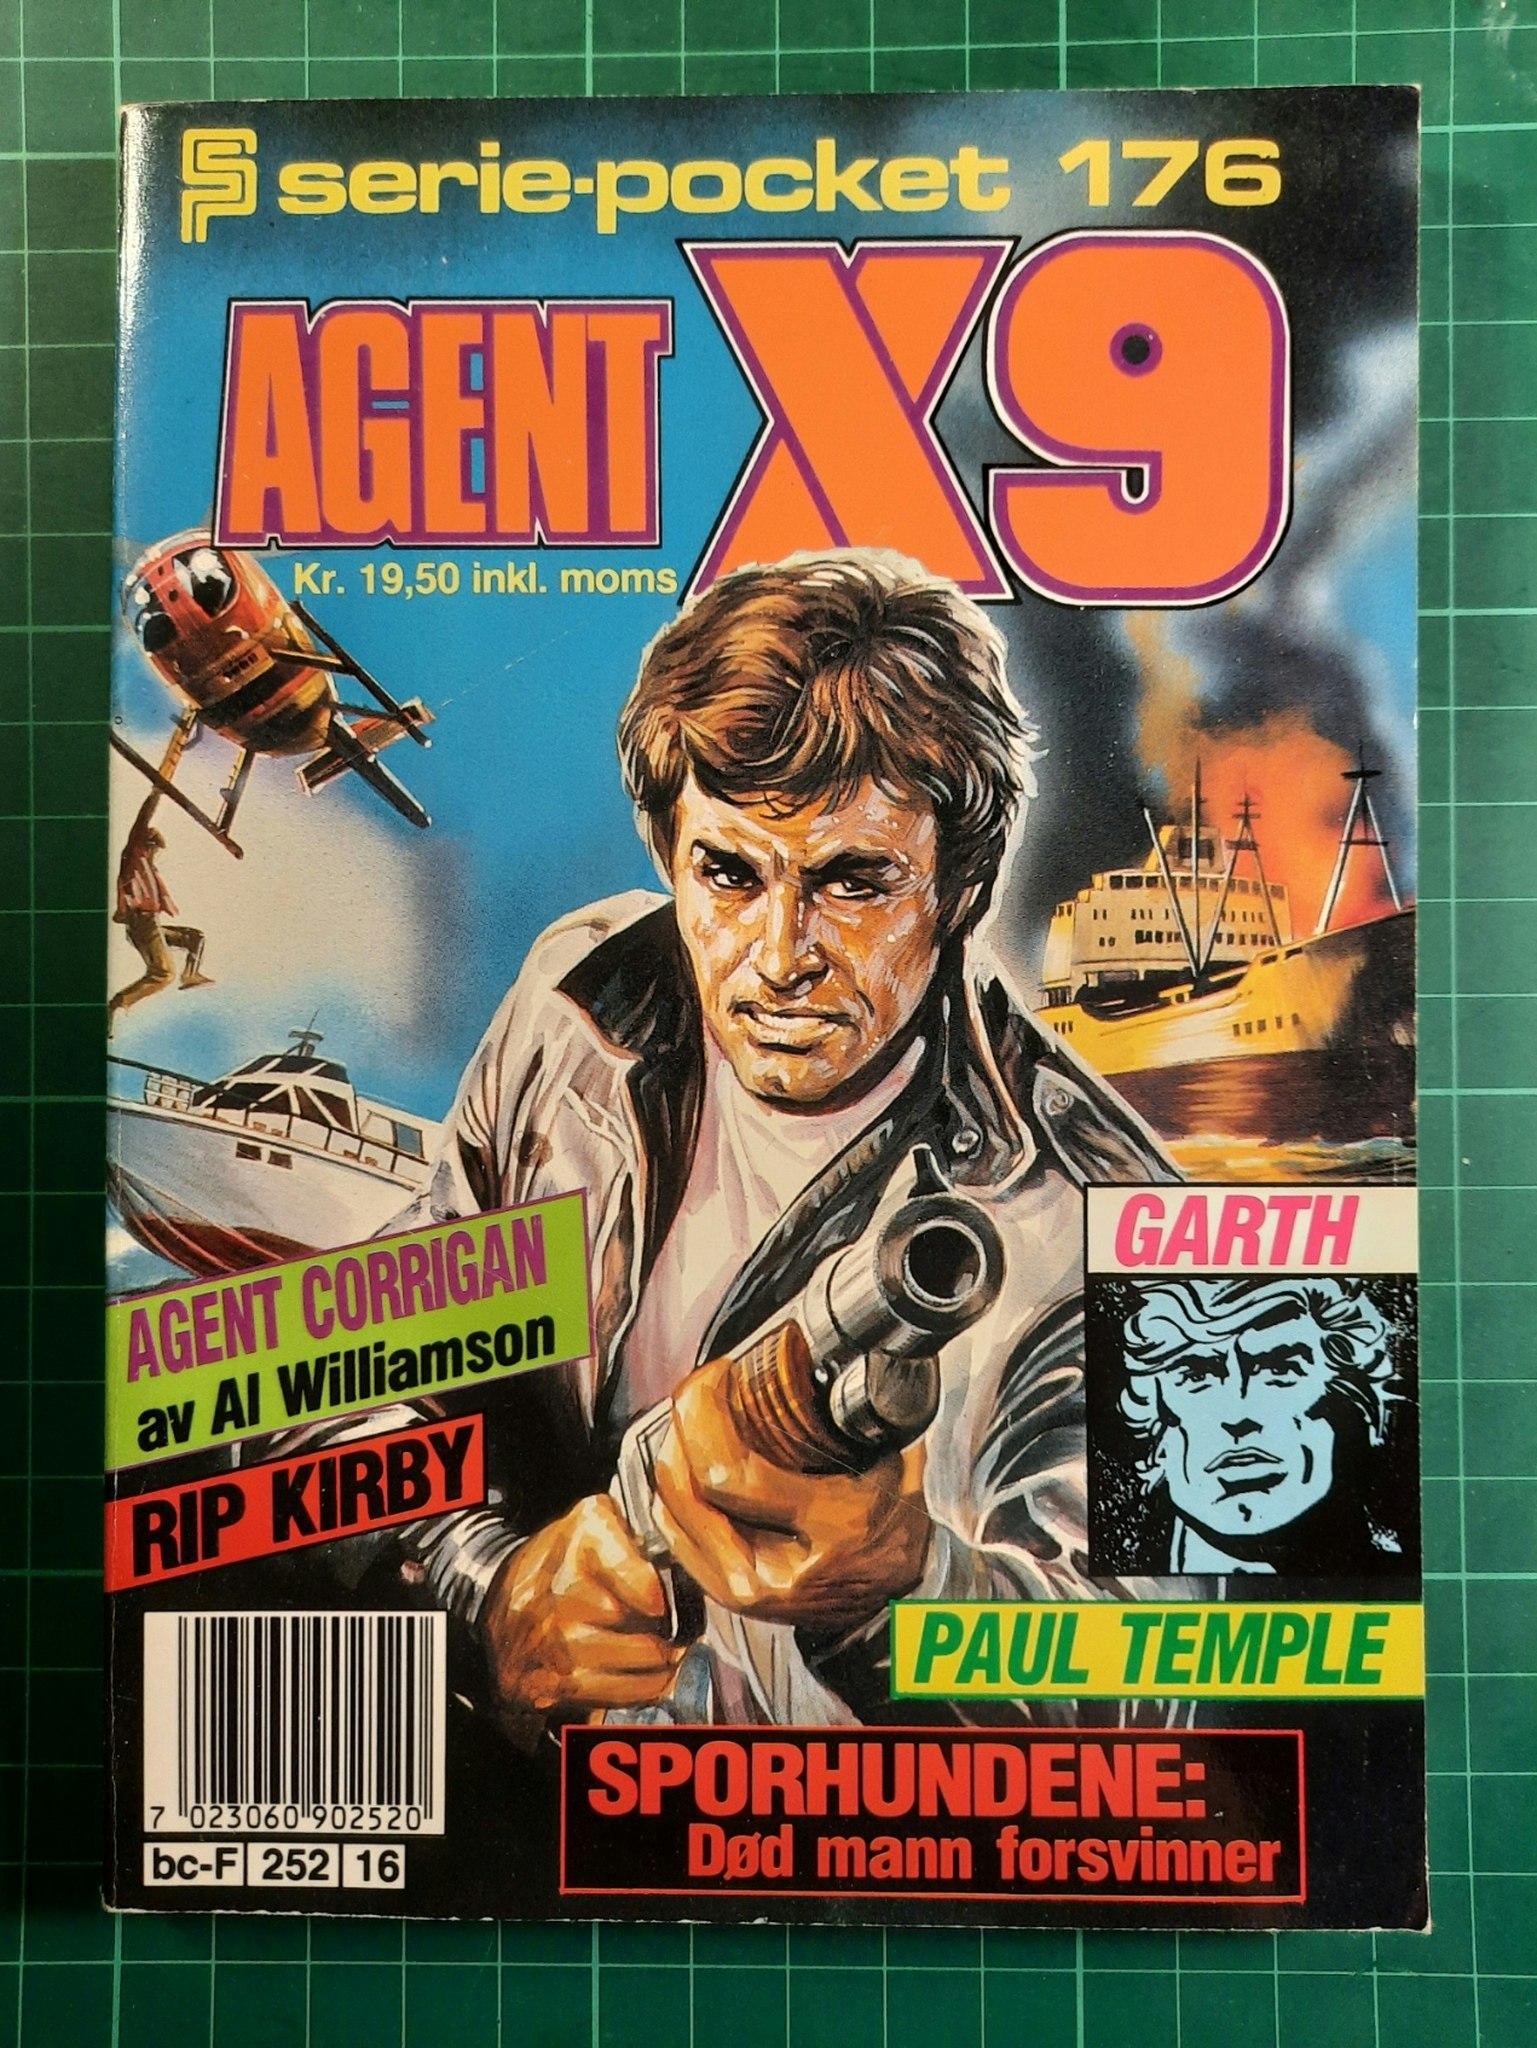 Serie-pocket 176 : Agent X9